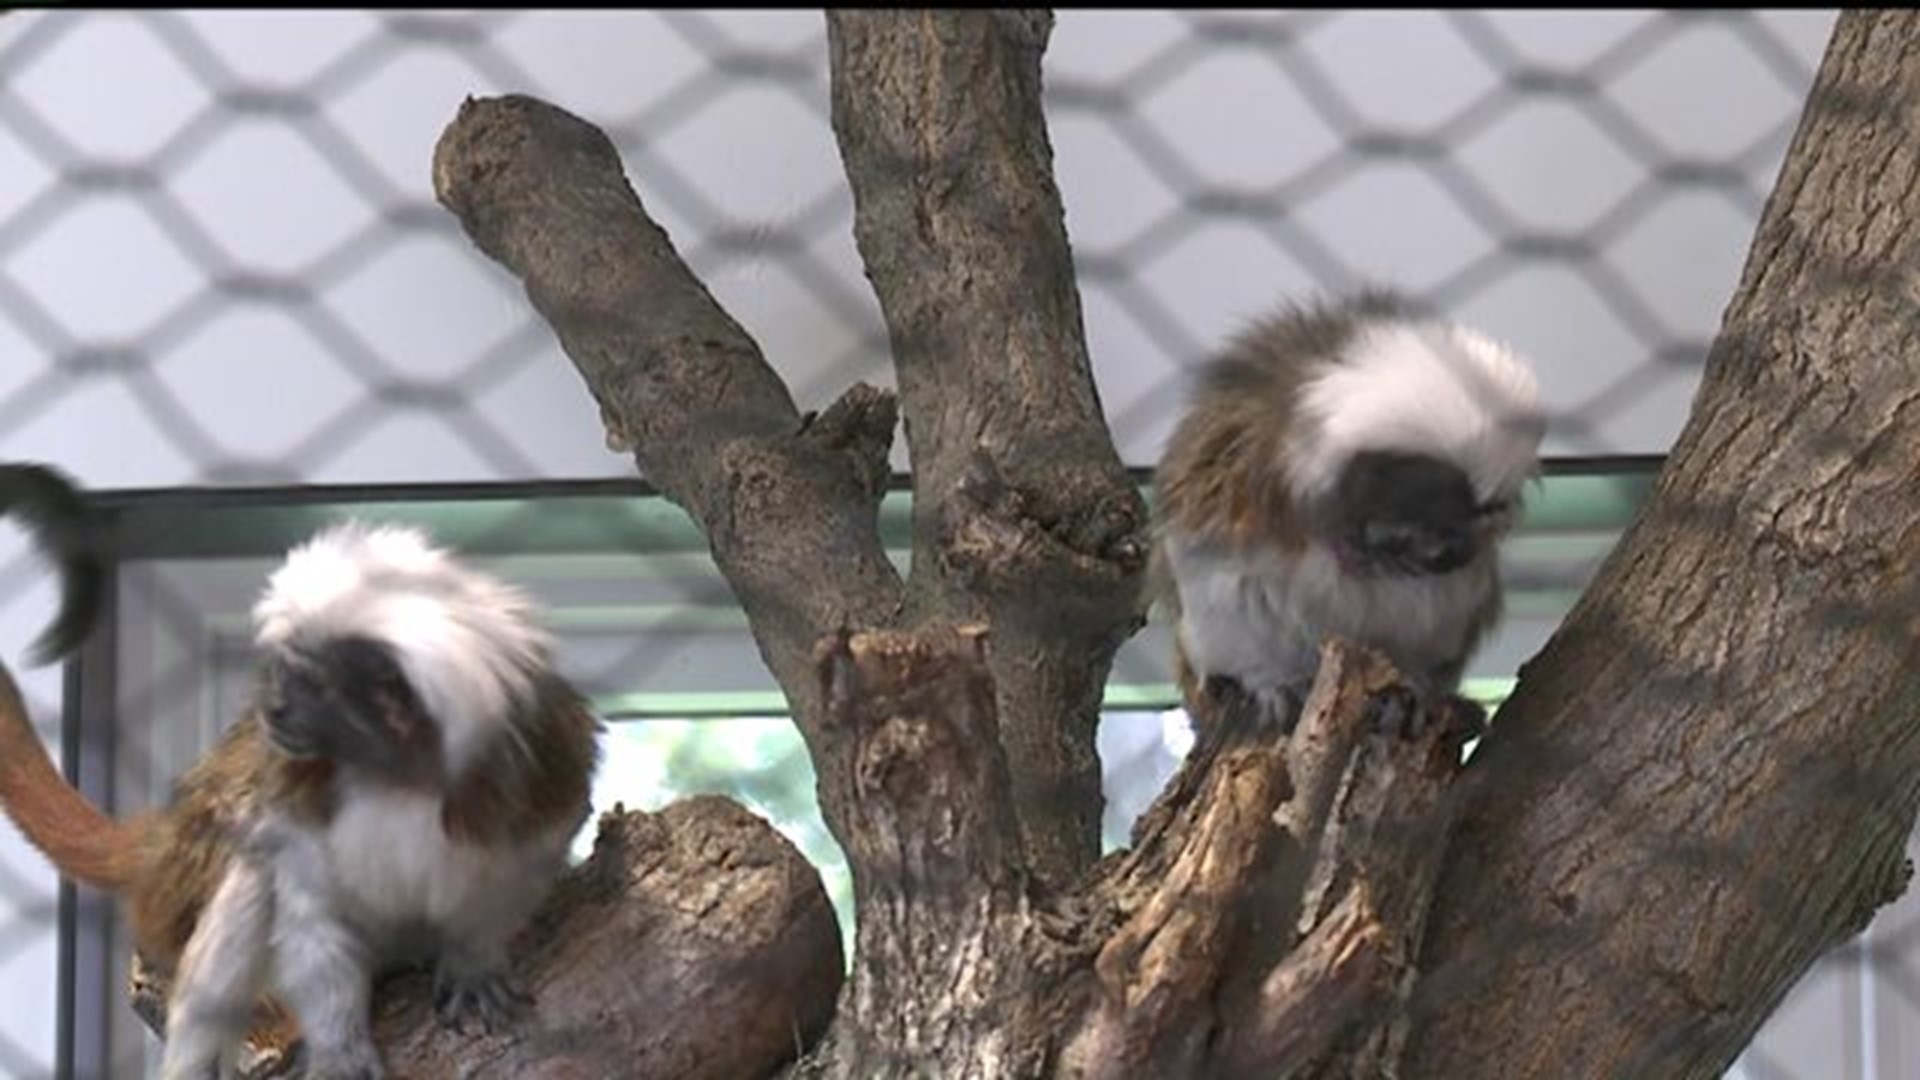 Niabi Zoo opens rainforest exhibit